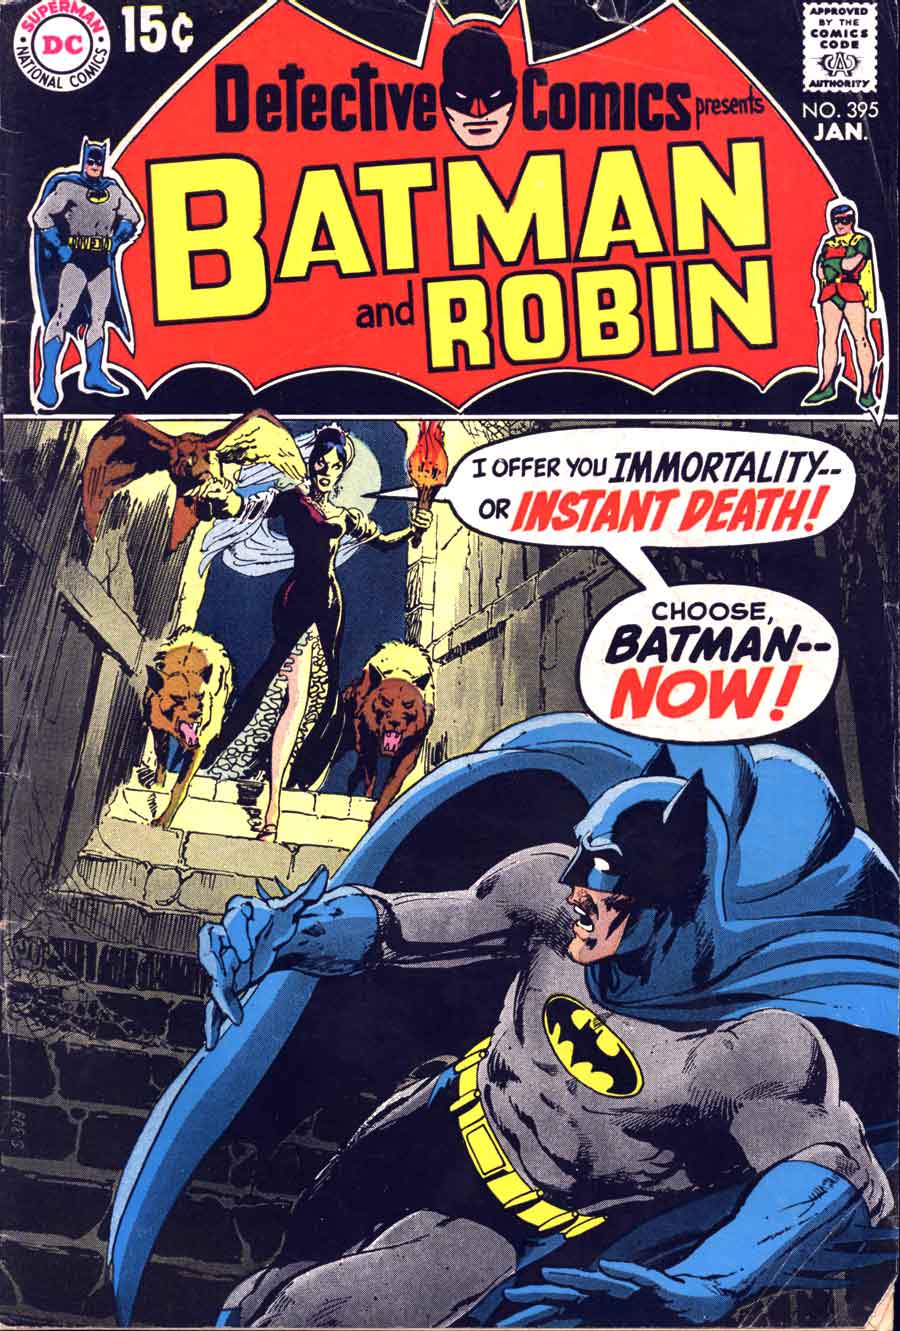 Detective Comics #395 dc Batman comic book cover art by Neal Adams